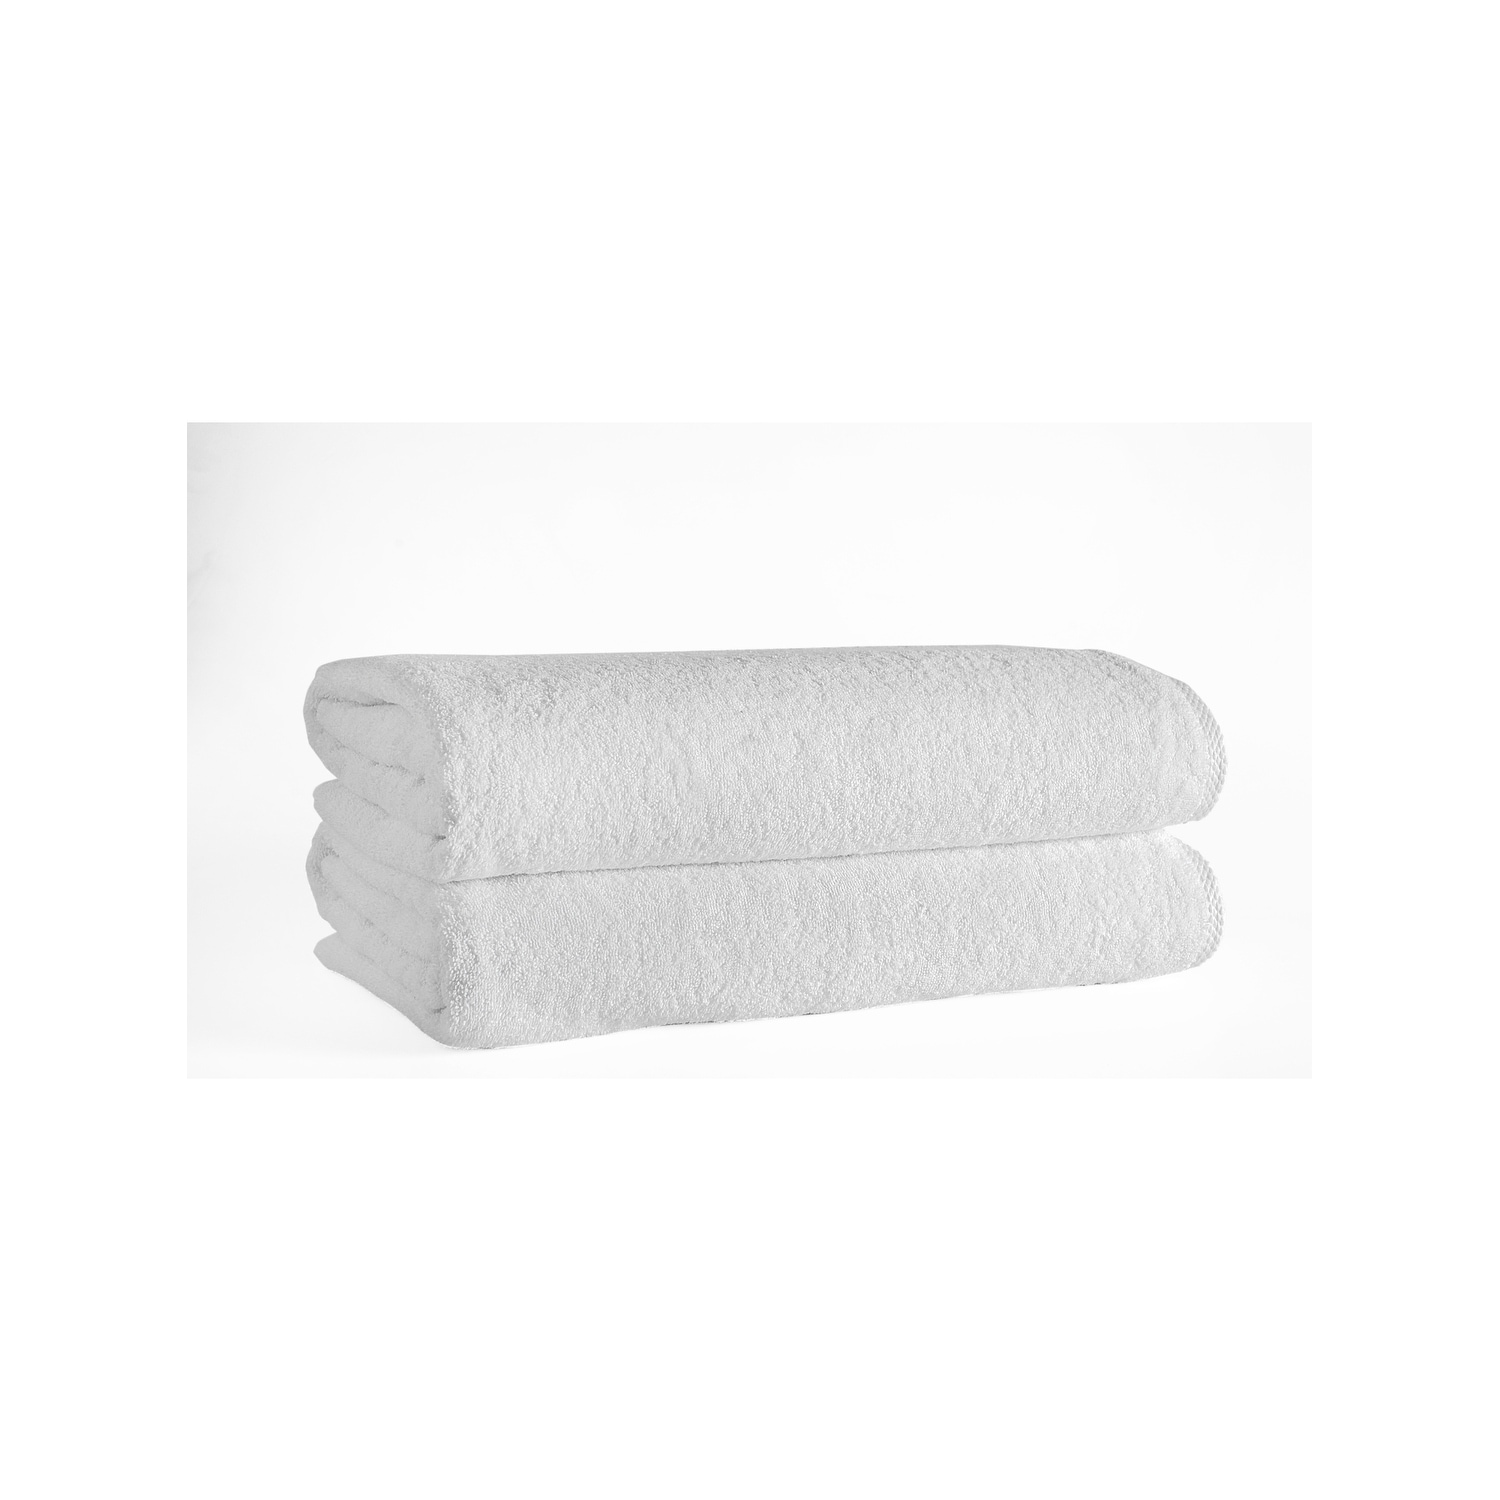 White Classic Luxury Grey Bath Sheet Towels 2 Pcs Set, Extra Large 35x70  Inch | 2 Pack, Grey